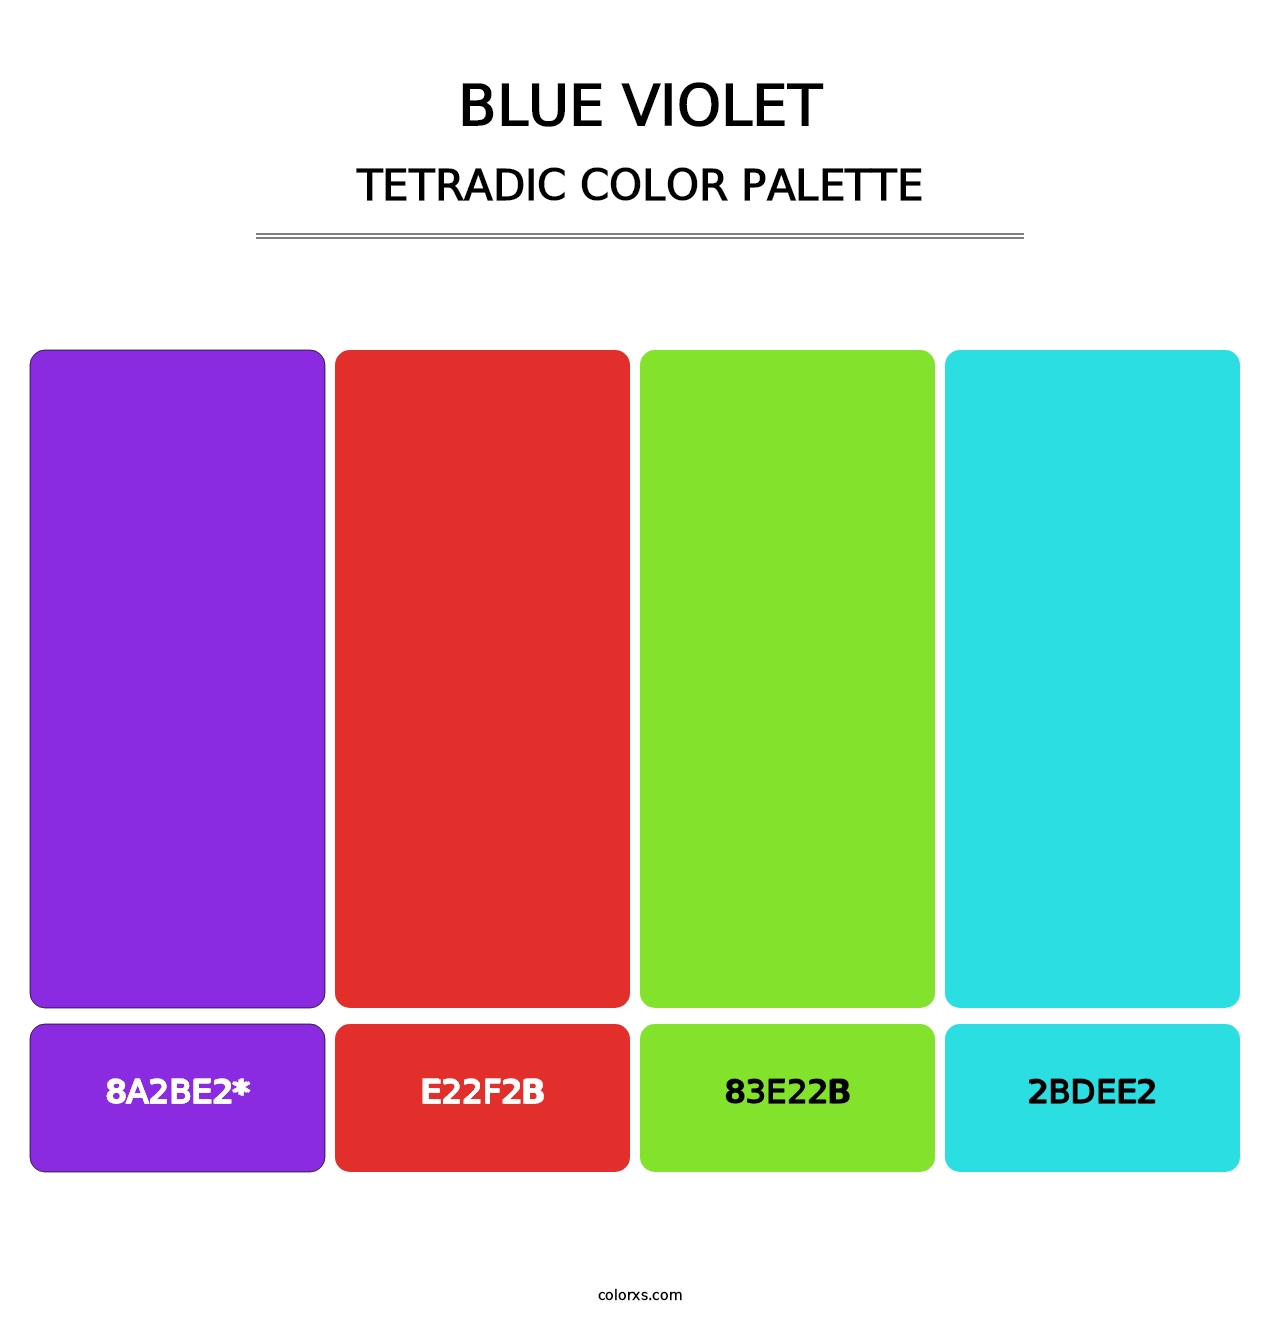 Blue Violet - Tetradic Color Palette